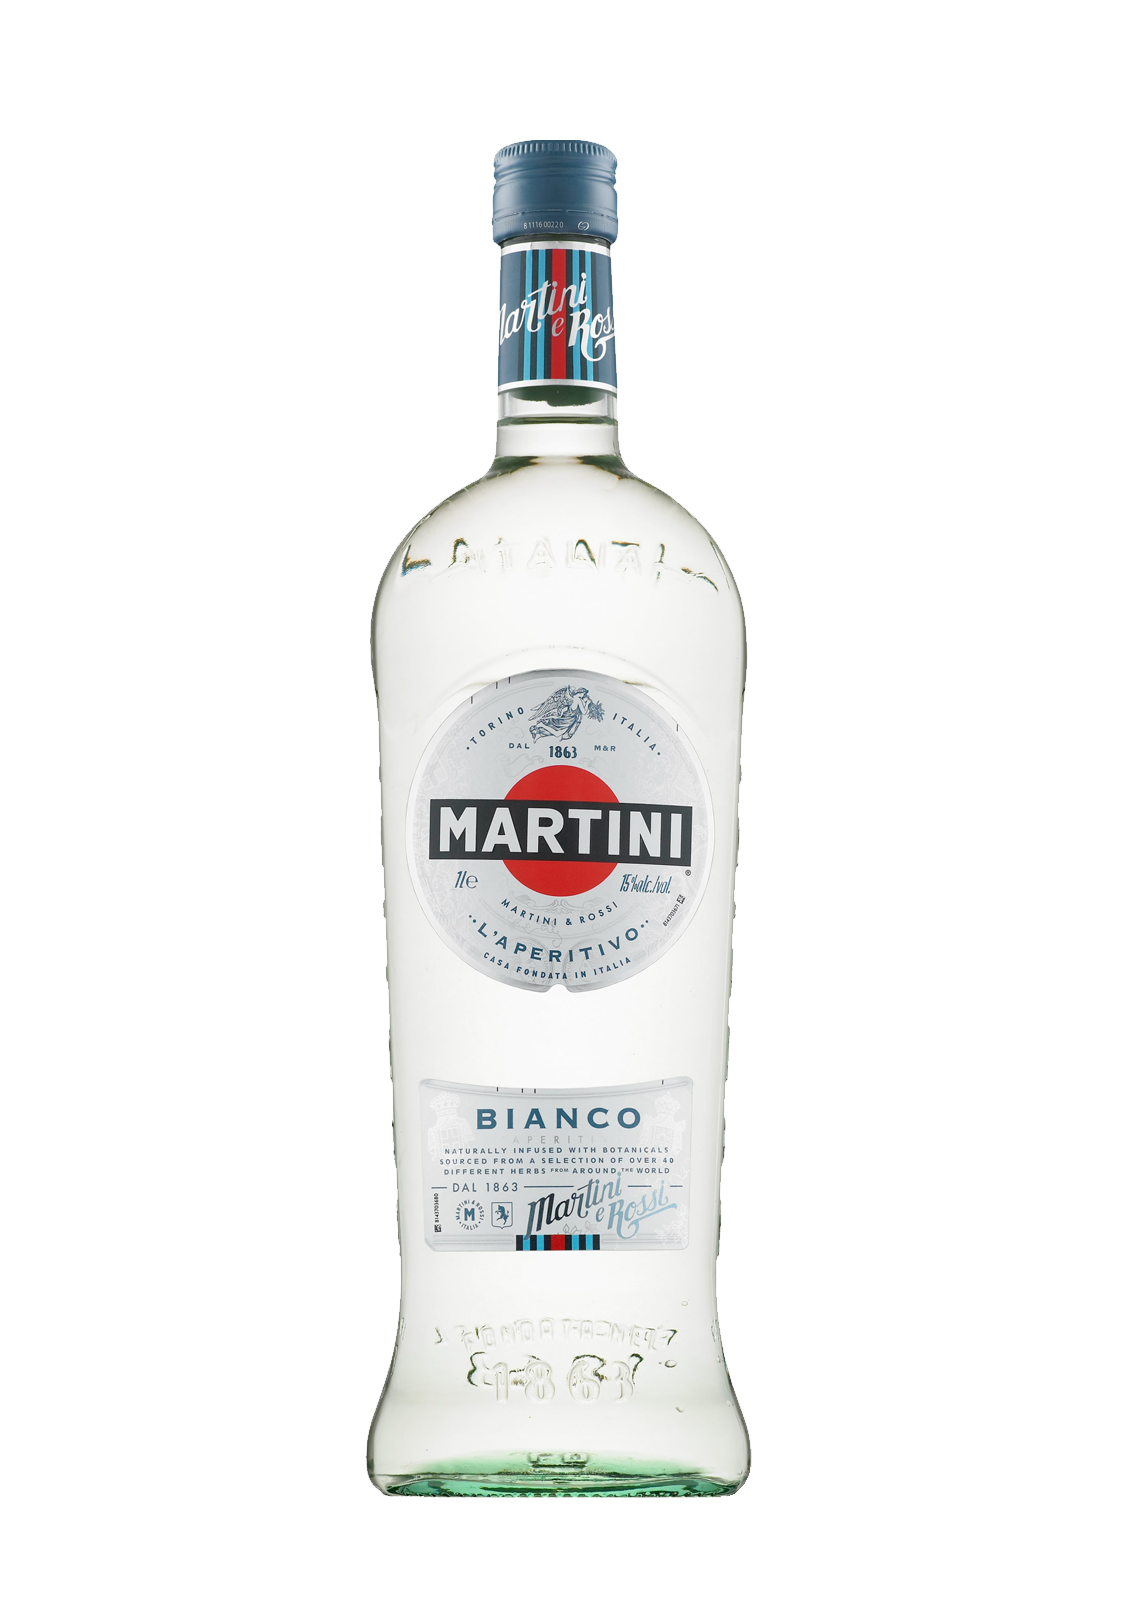 Torino drinks bianco martini Martini (vermouth)